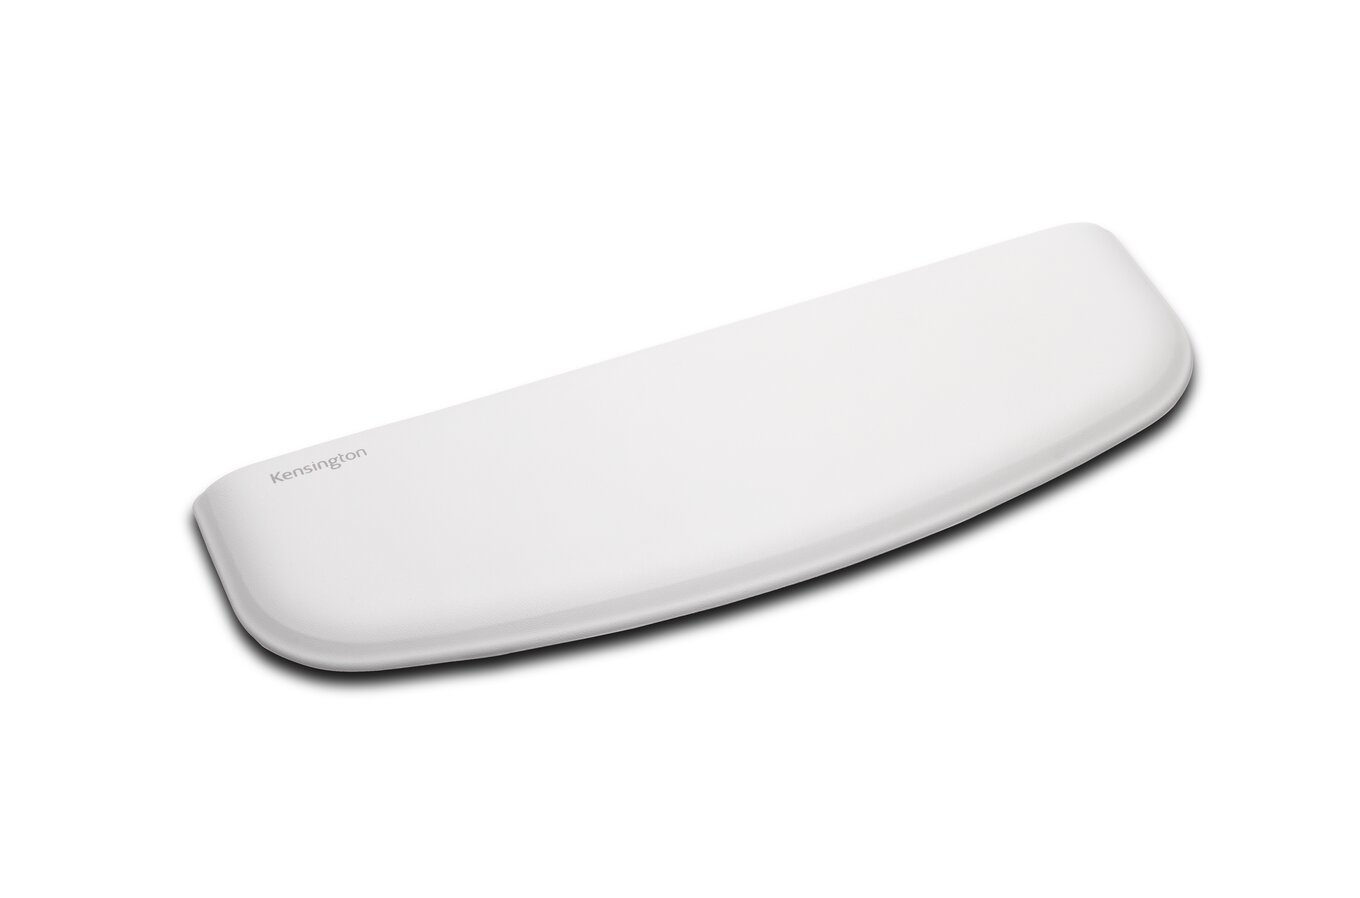 Wrist Rest Slim Compact Kboard Grey K50435eu - WC01